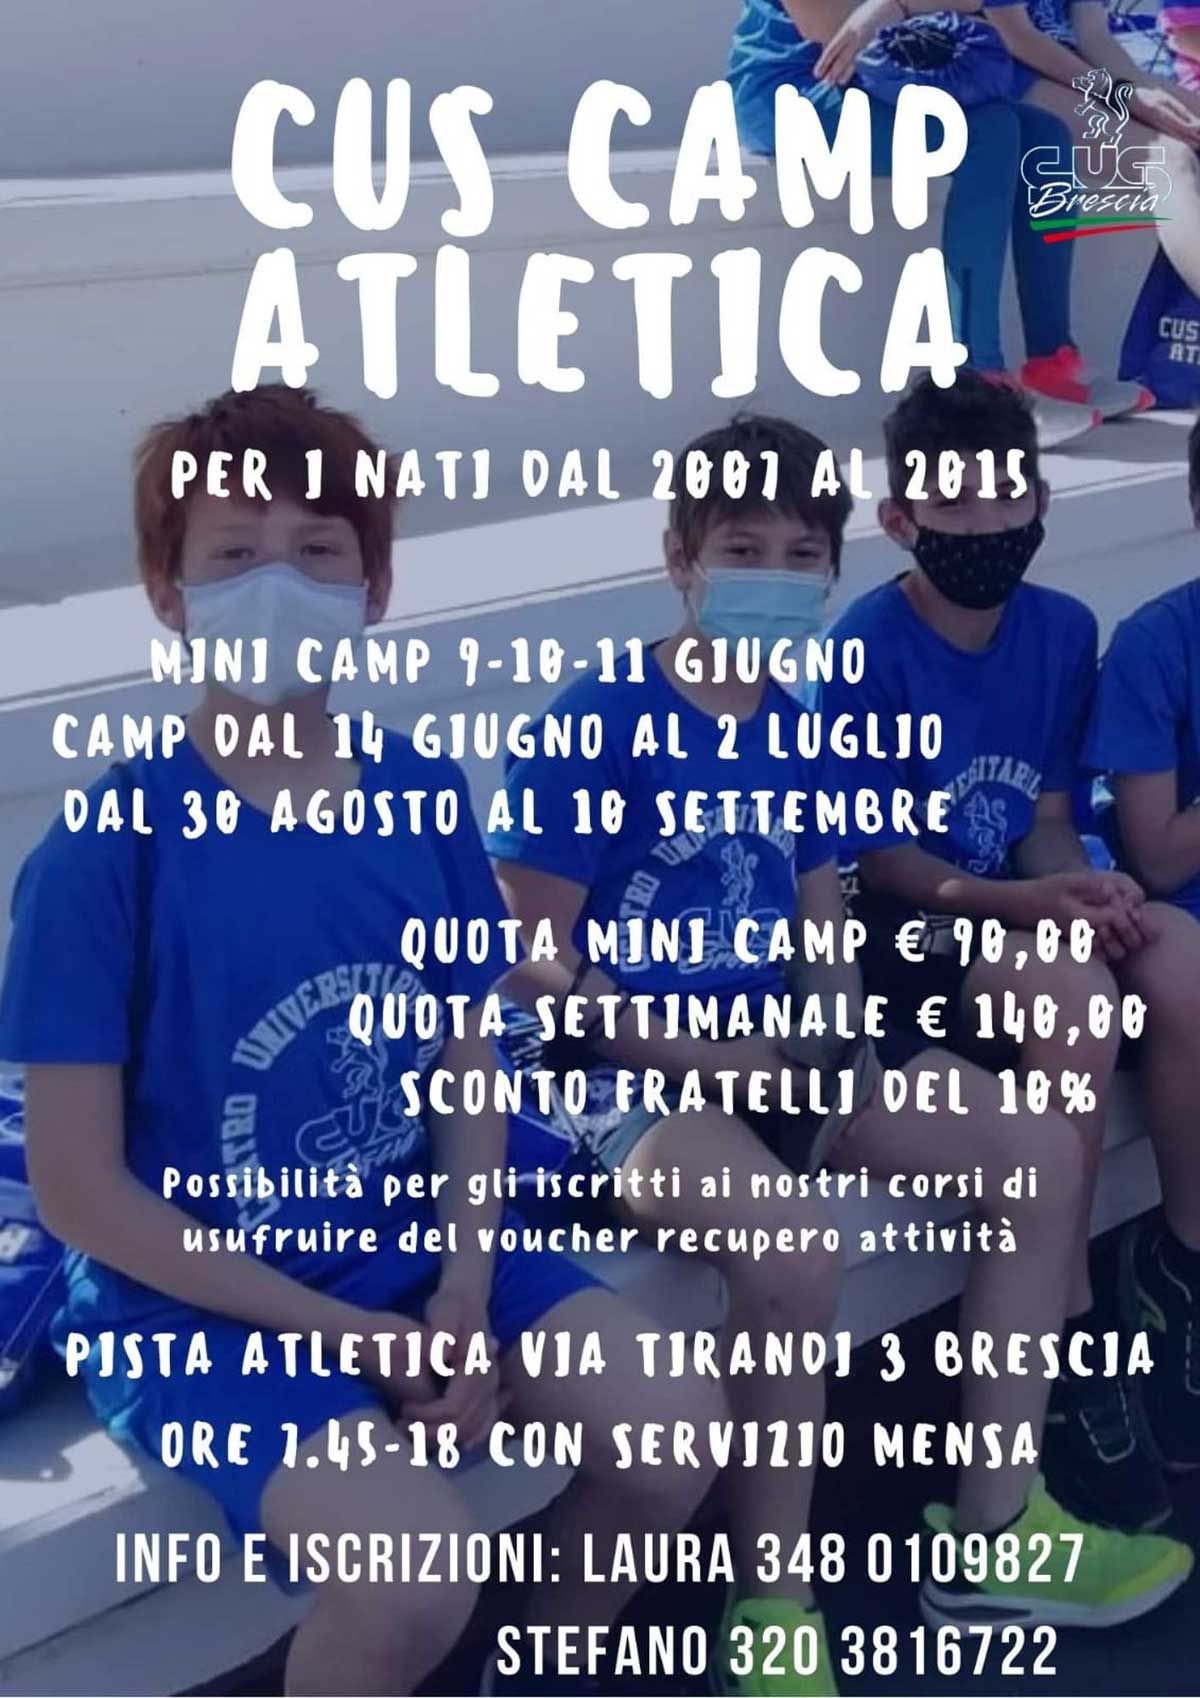 cus-camp-atletica-leggera-estate-2021